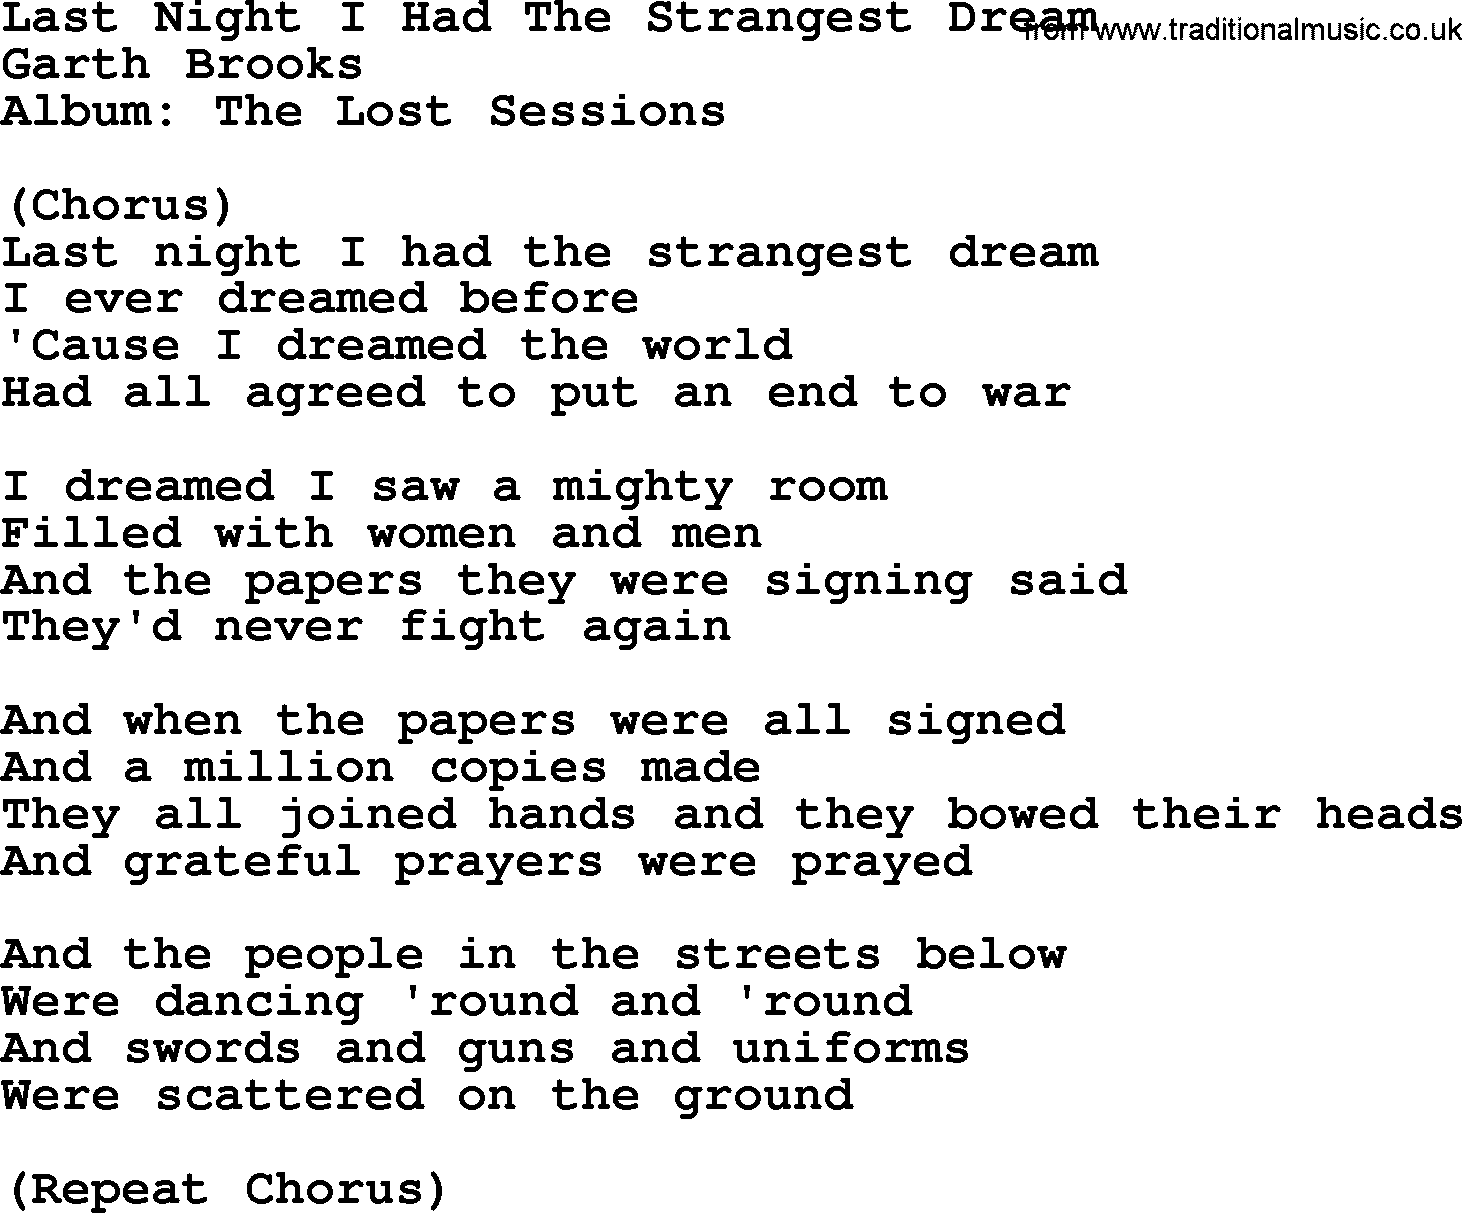 Garth Brooks song: Last Night I Had The Strangest Dream, lyrics